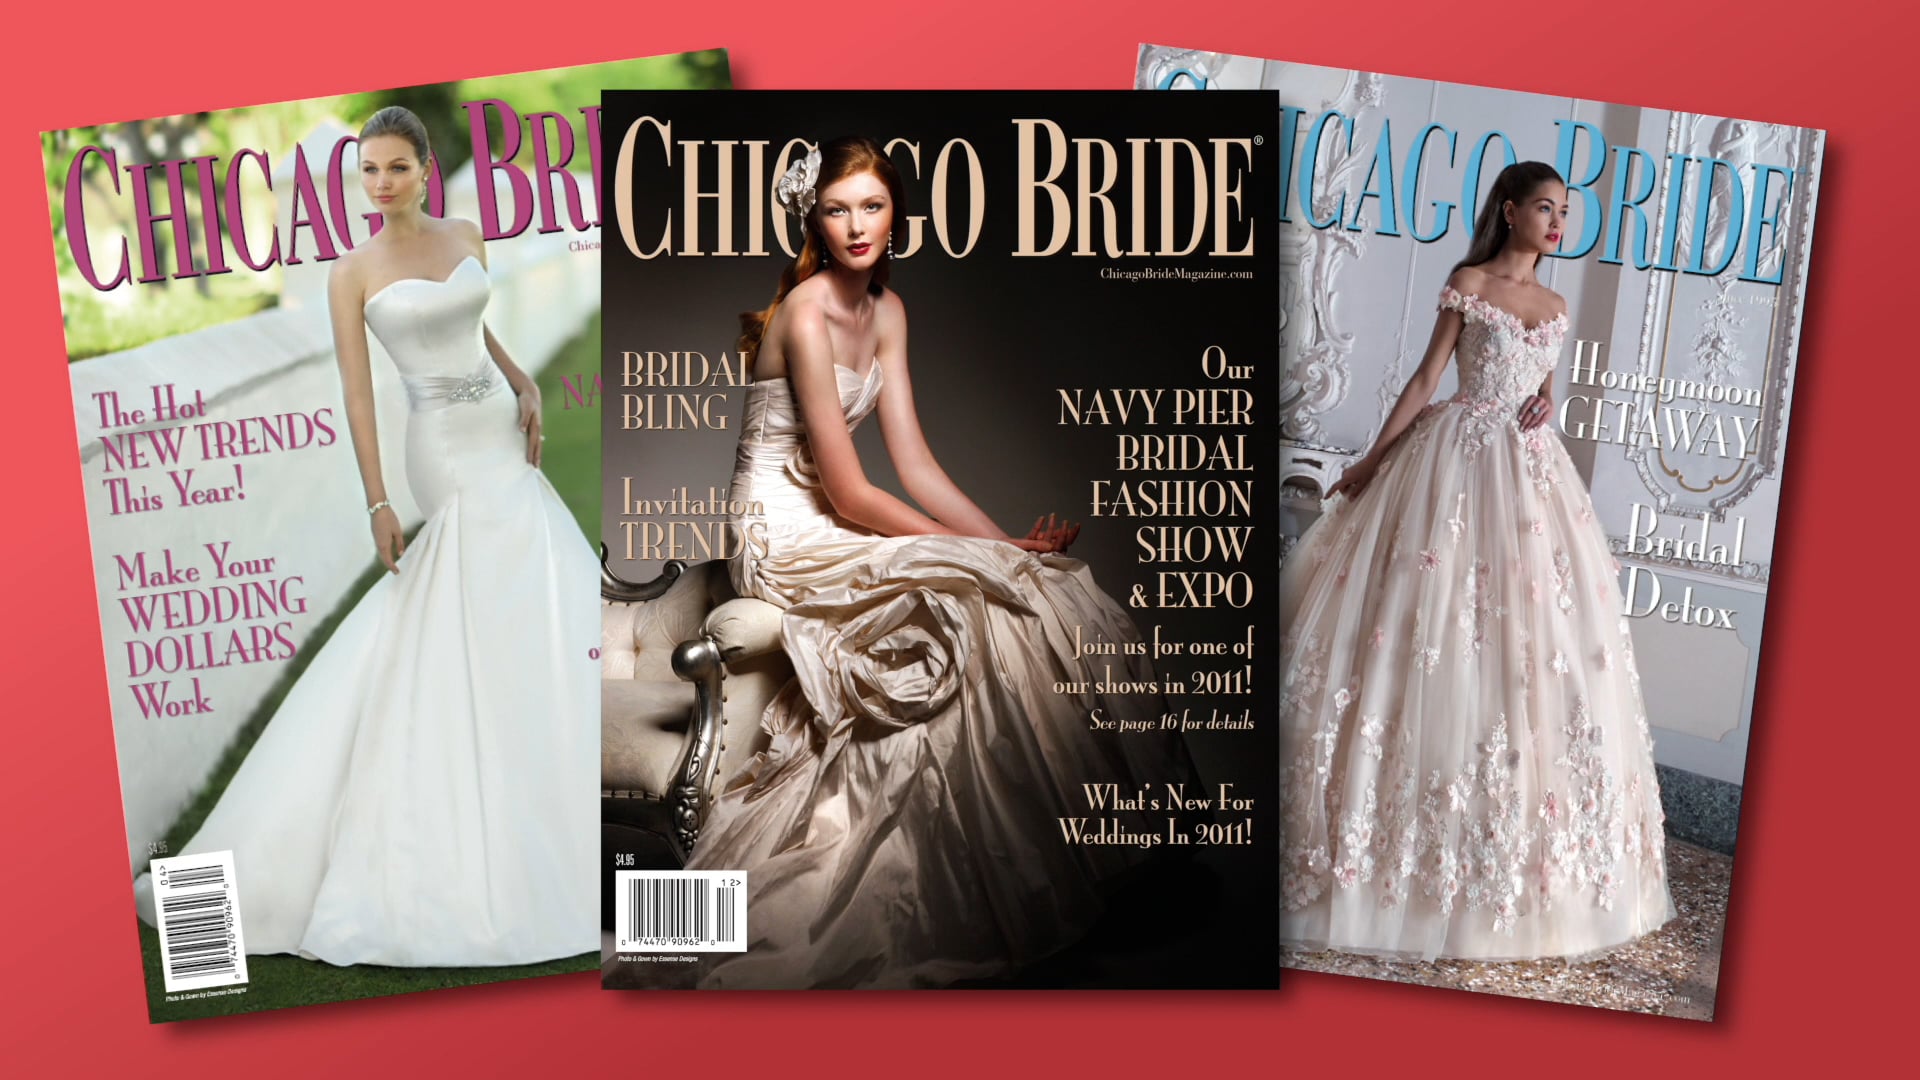 Chicago Bride Magazine